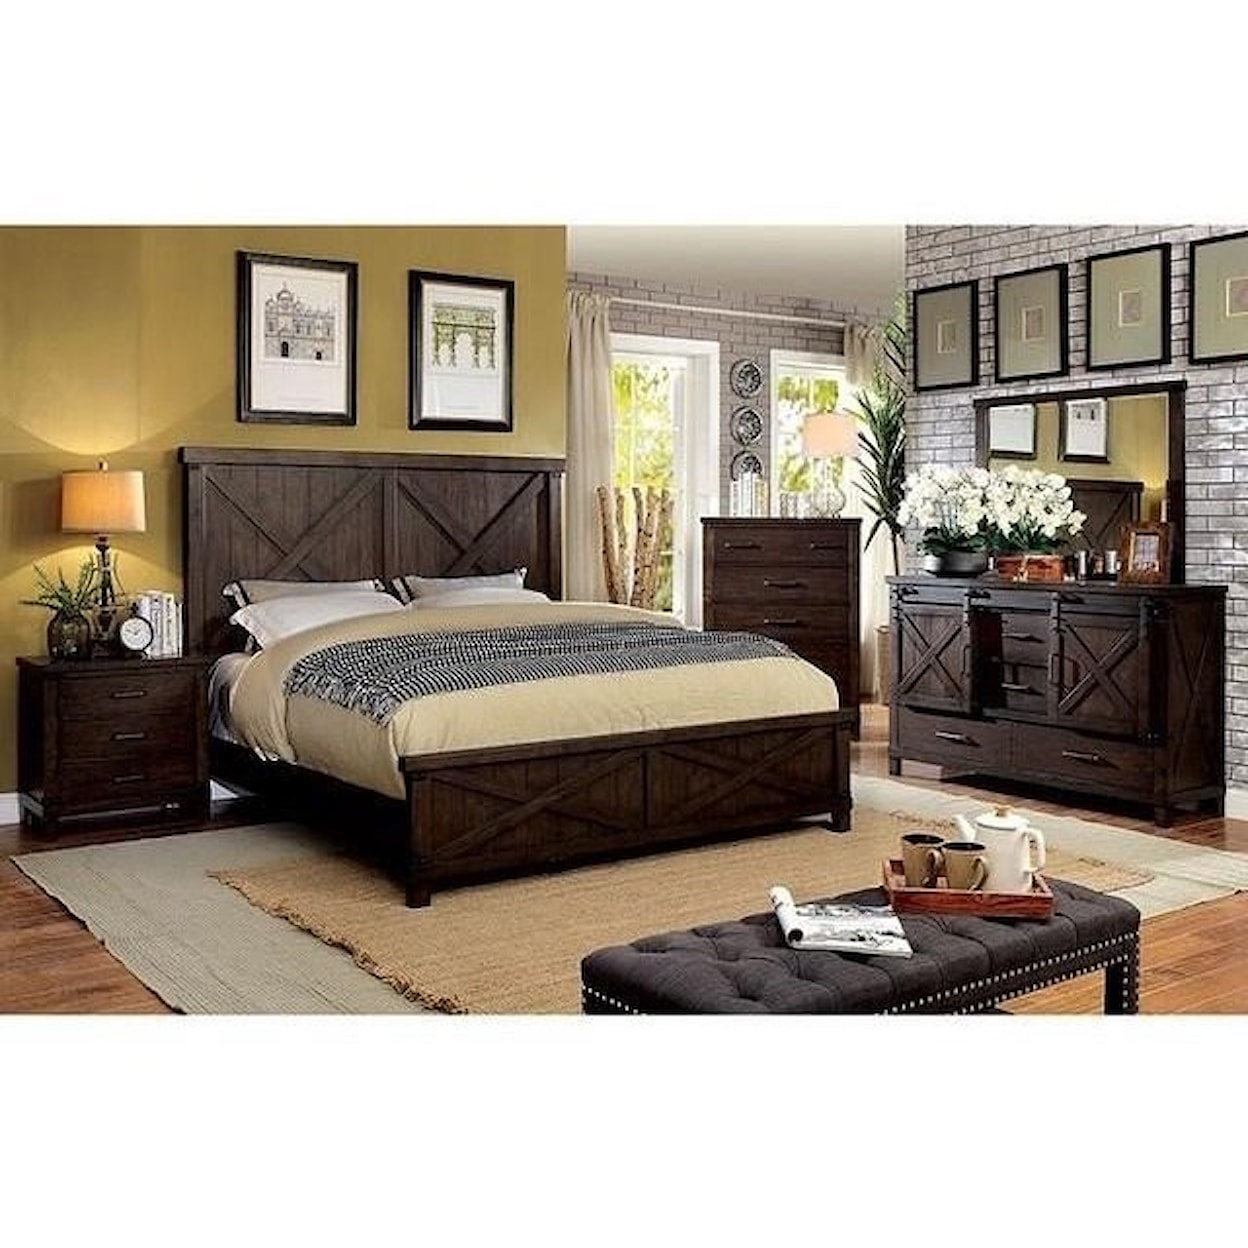 Furniture of America Bianca Queen Bed